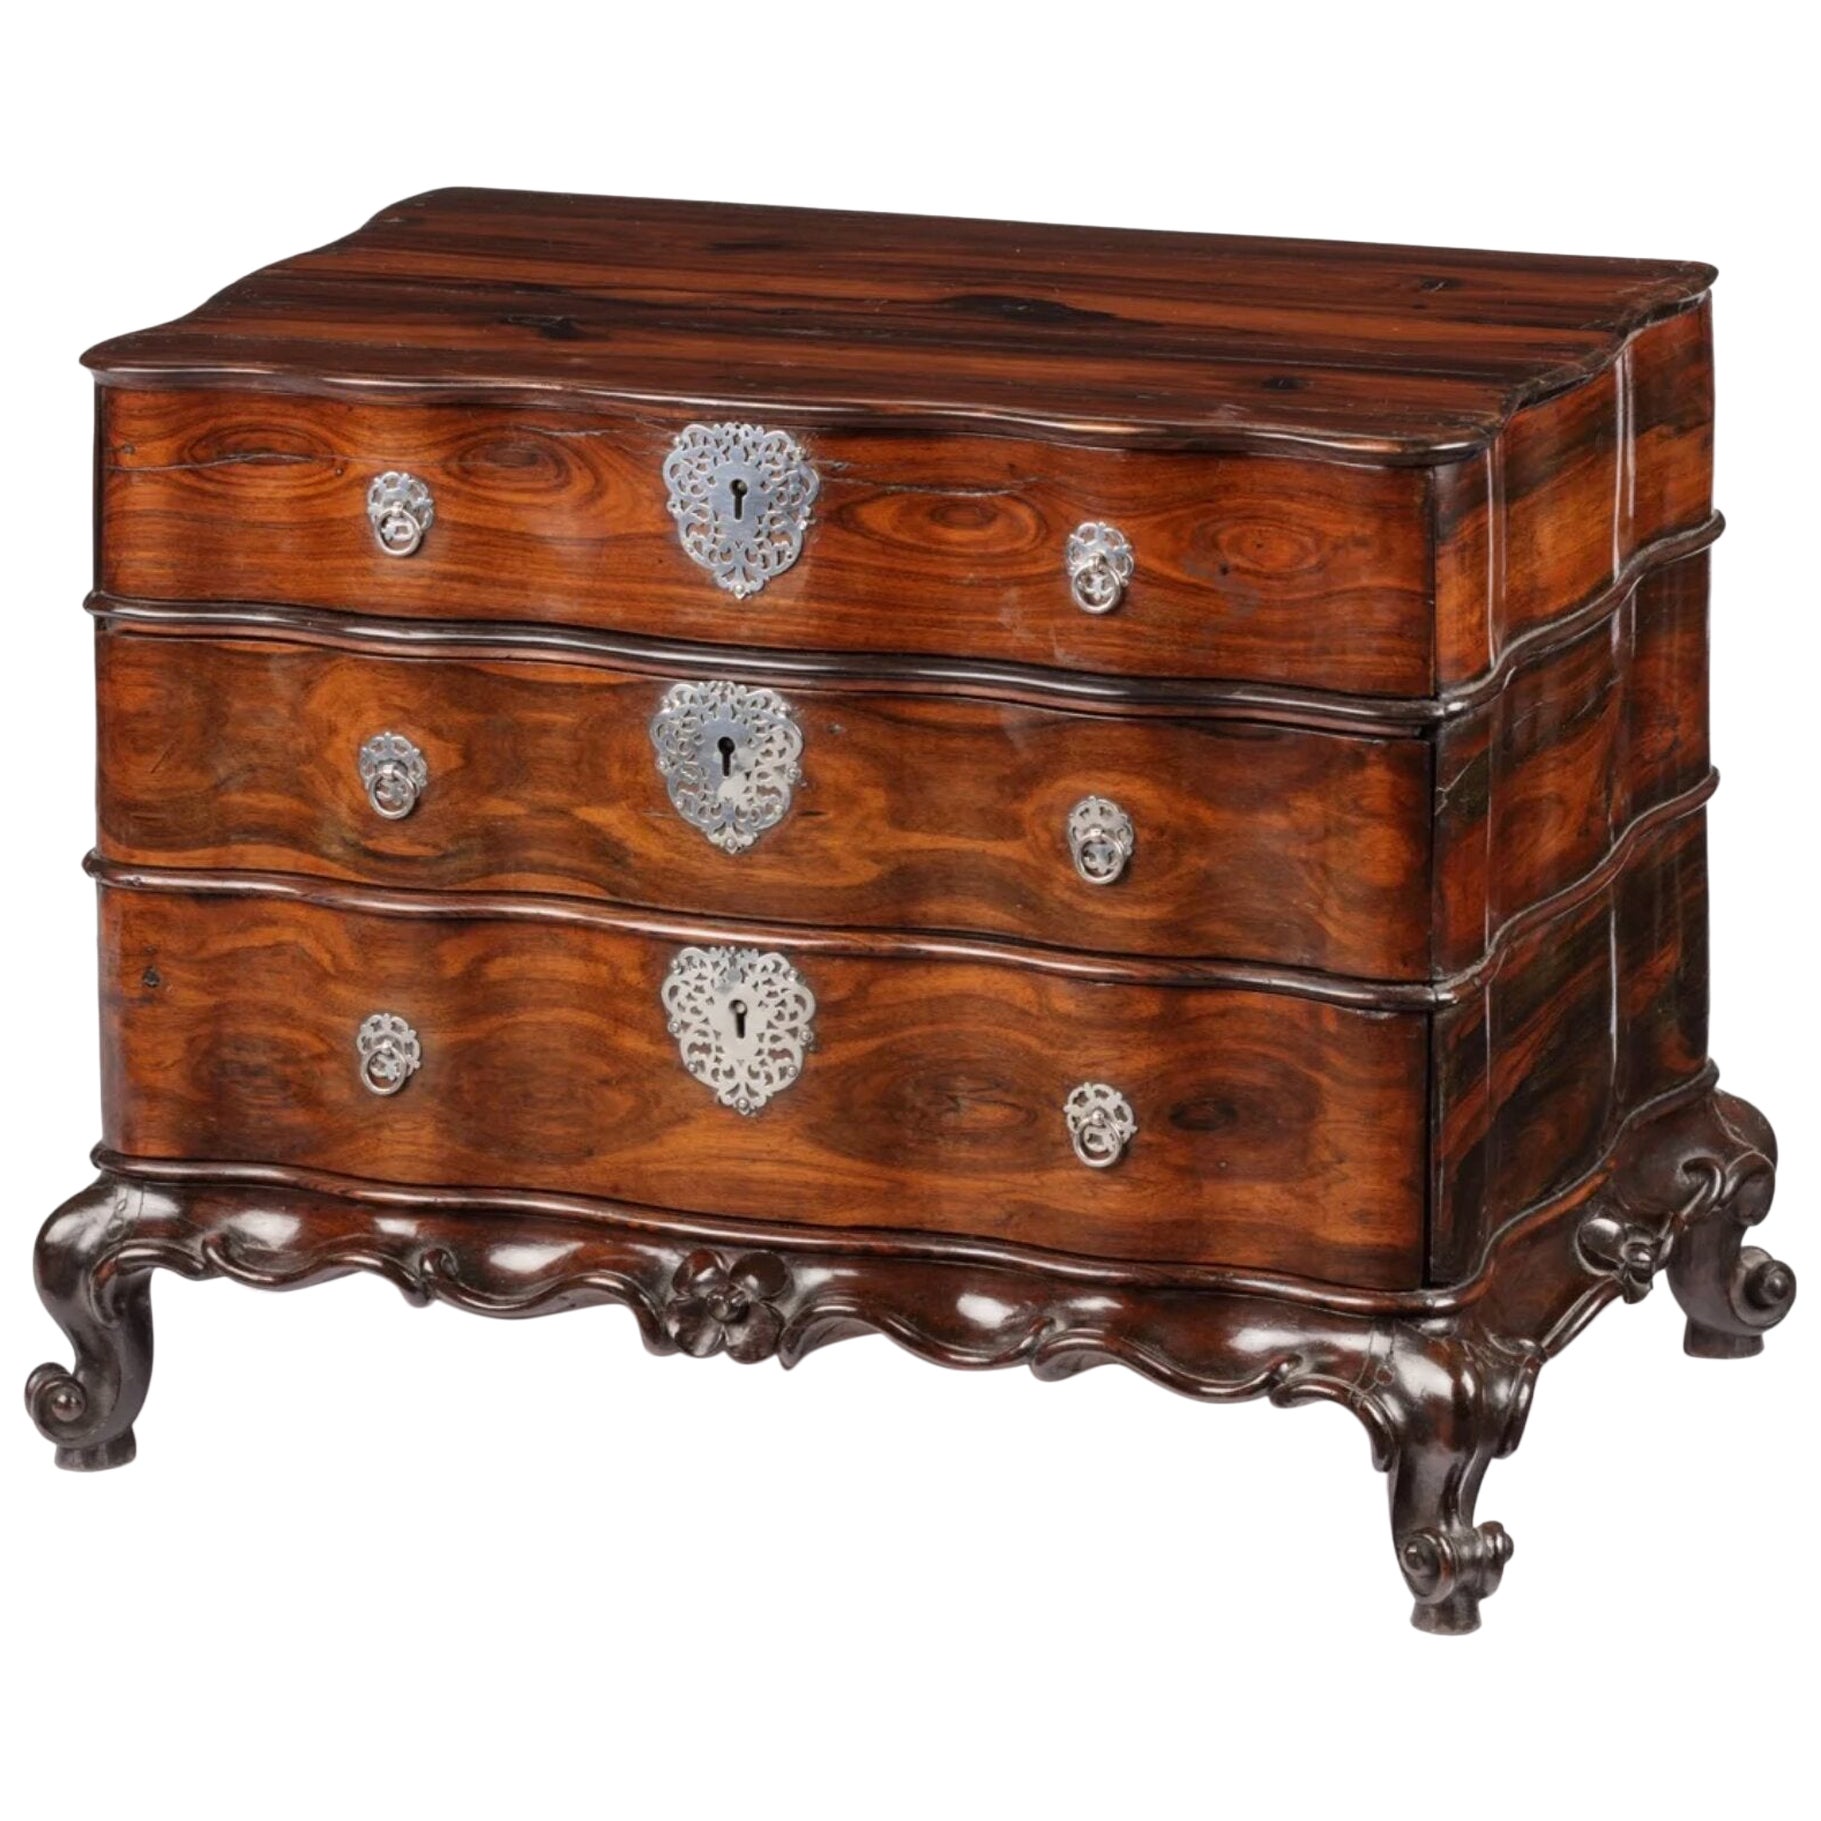 A Dutch-colonial Sri Lankan coromandel wood miniature chest of drawers For Sale